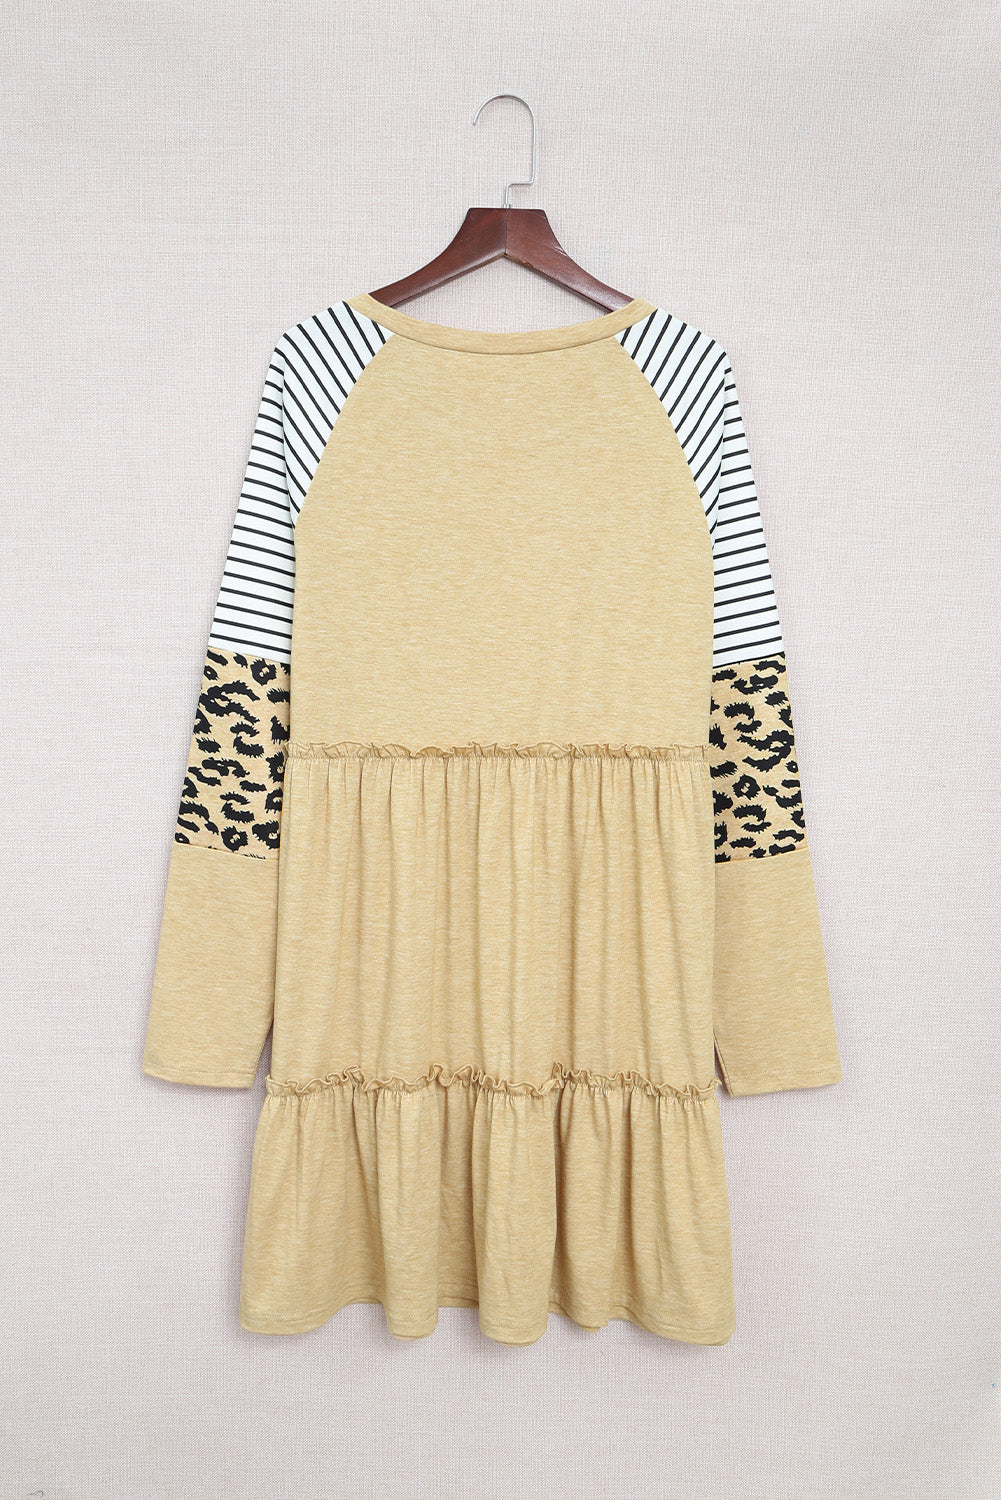 Women's Khaki Striped Leopard Patchwork Long Sleeve Short Dress